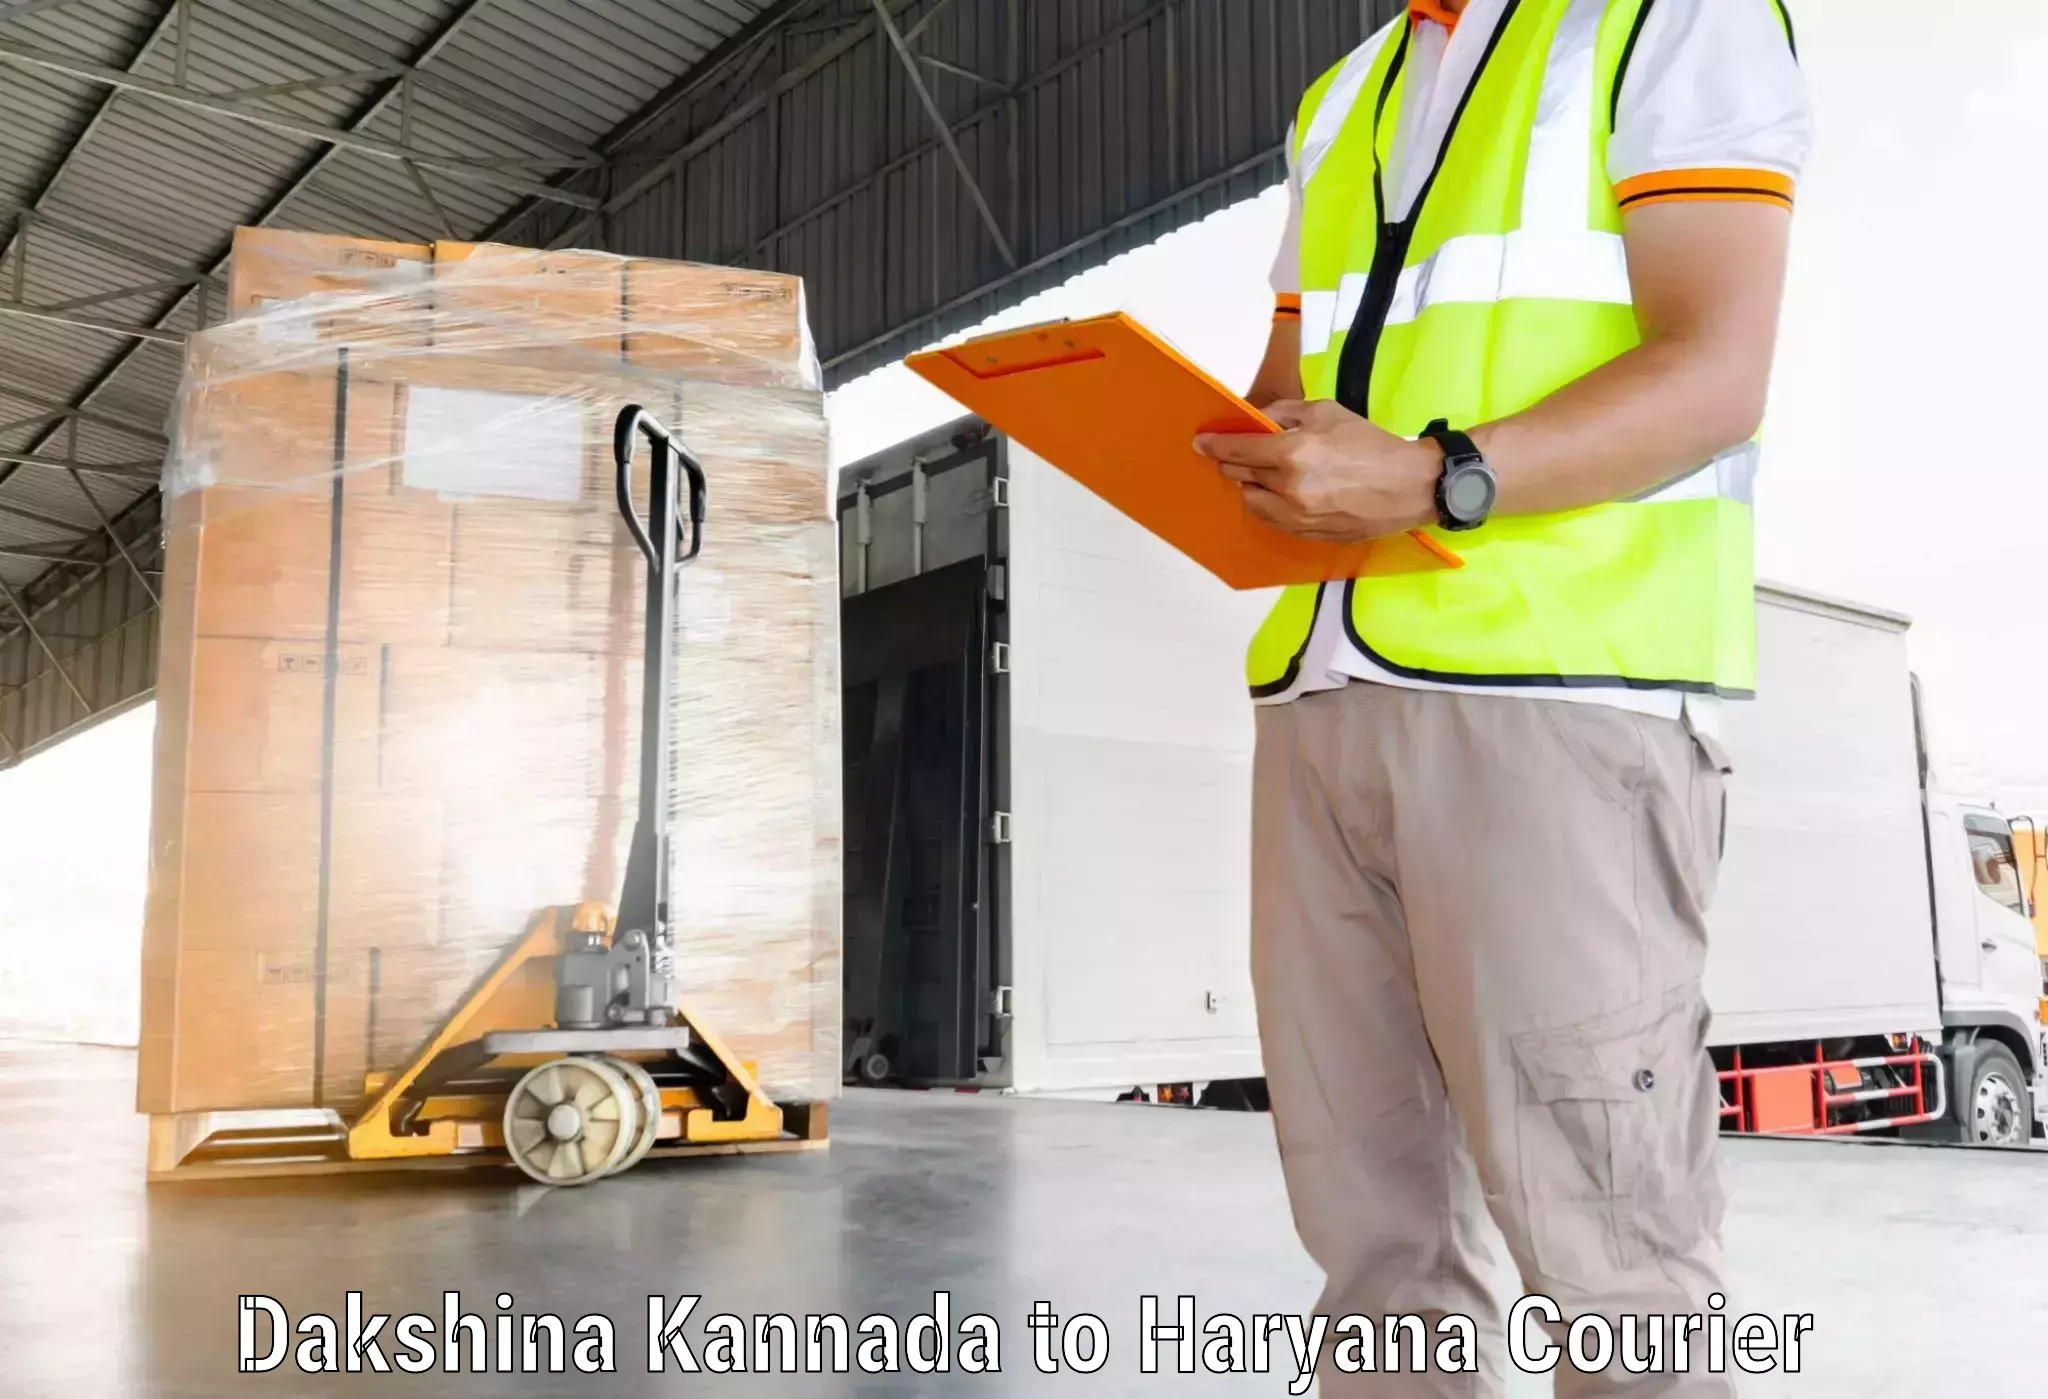 Courier service innovation Dakshina Kannada to Bhiwani